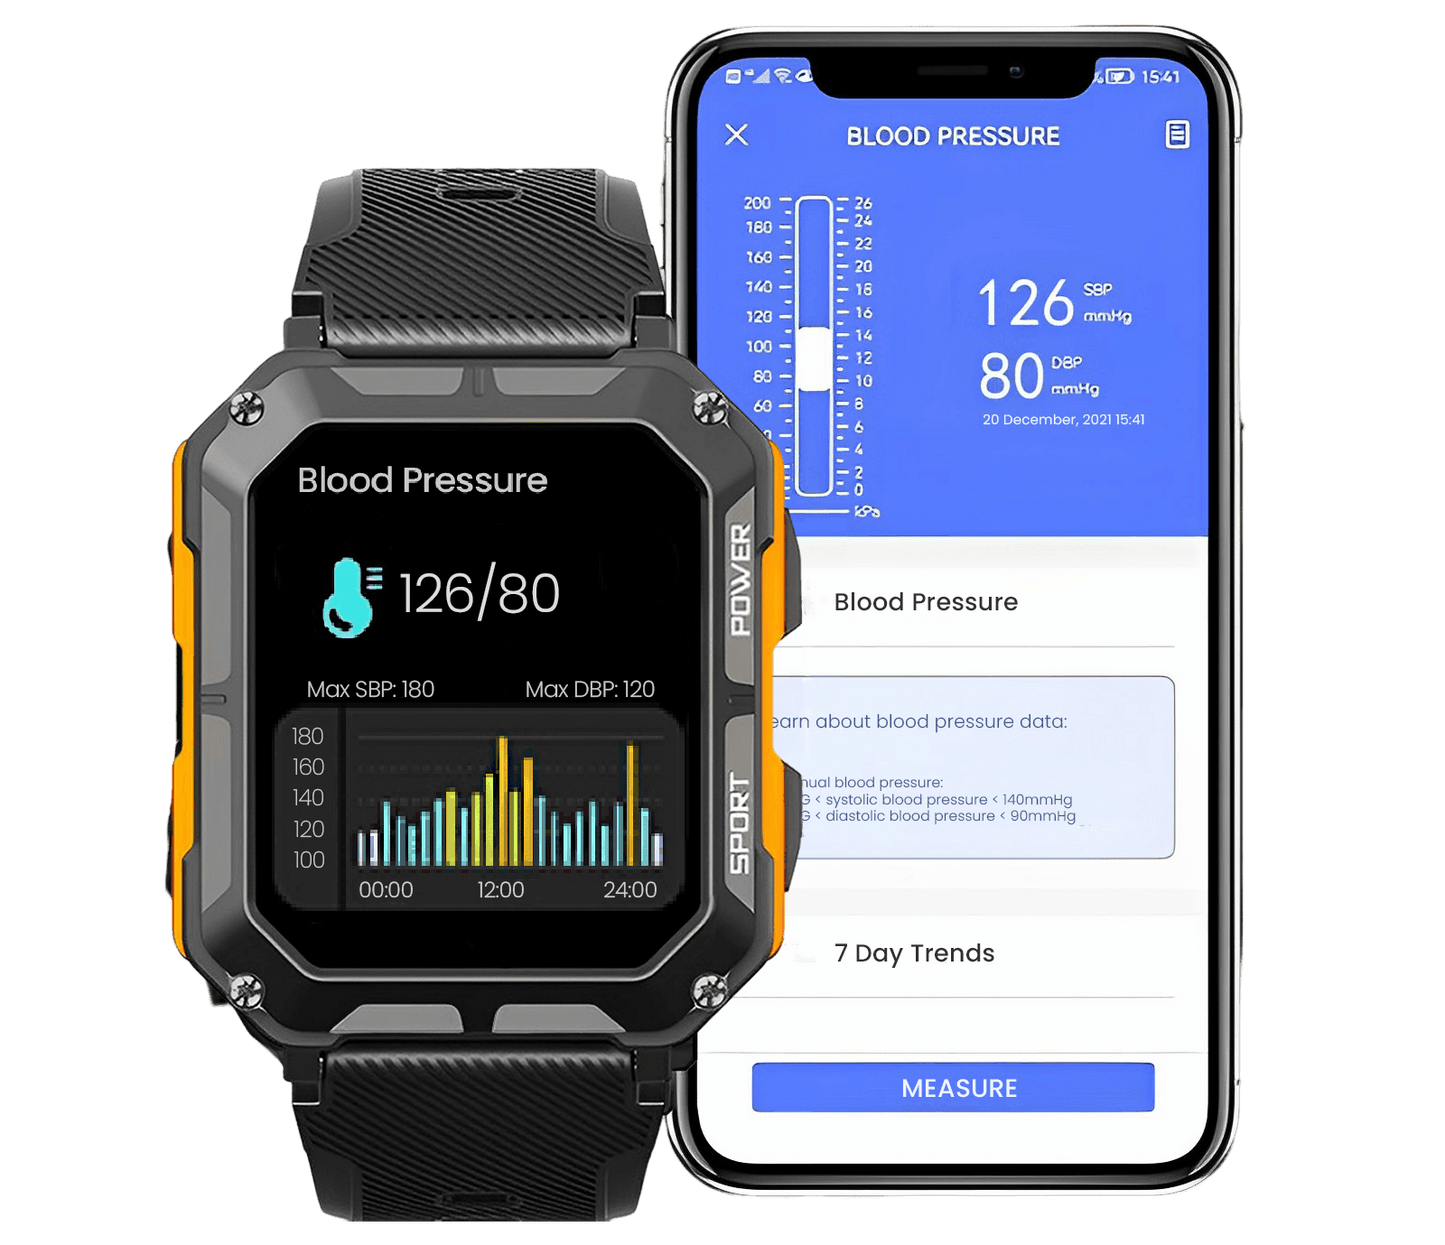 Thor™ - La smartwatch indestructible